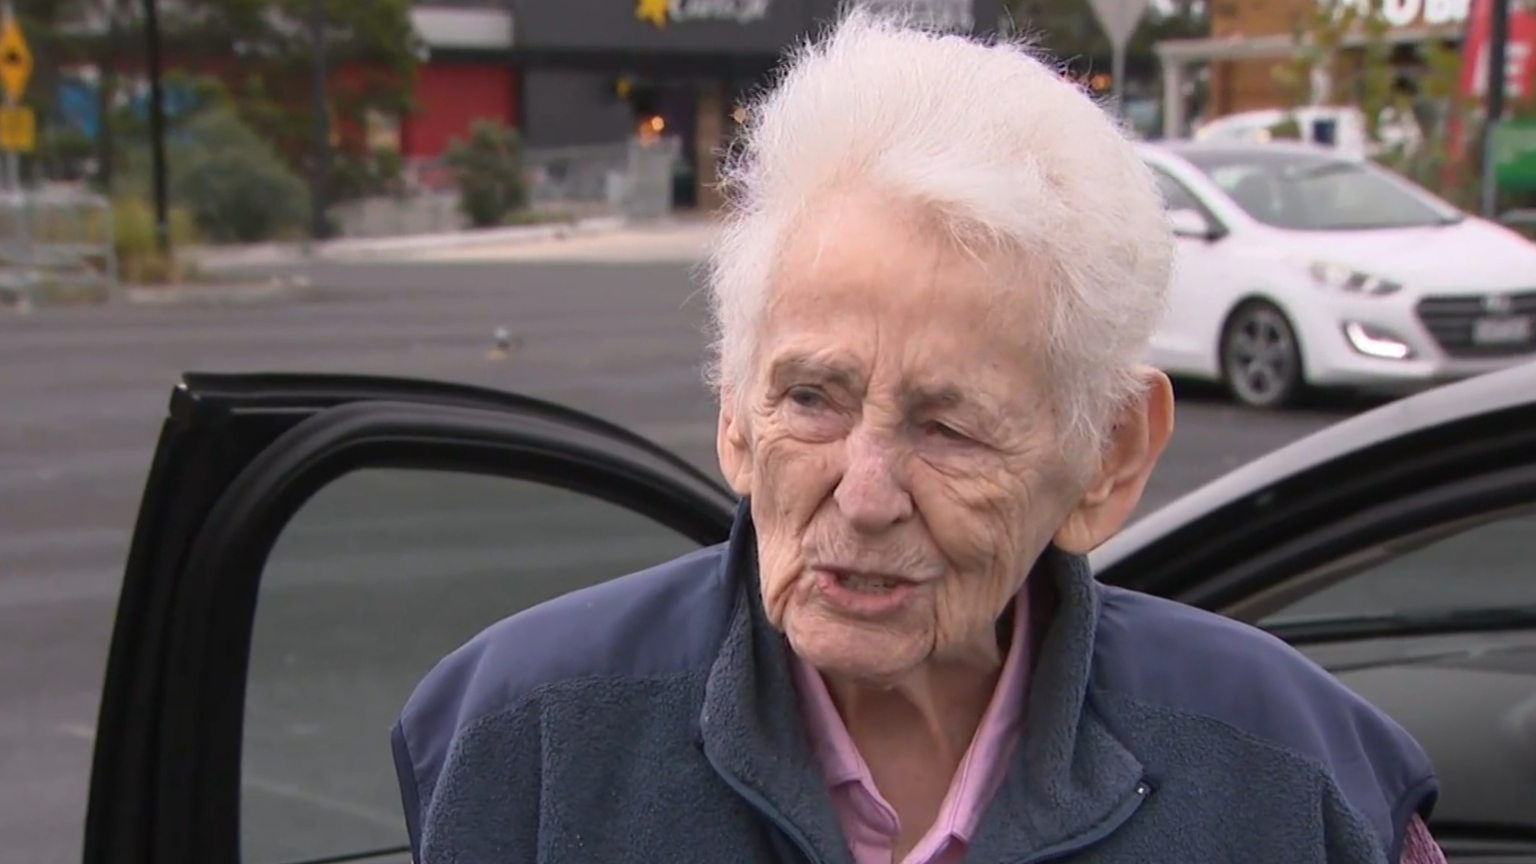 Push to make elderly drivers undergo mandatory checks knocked back